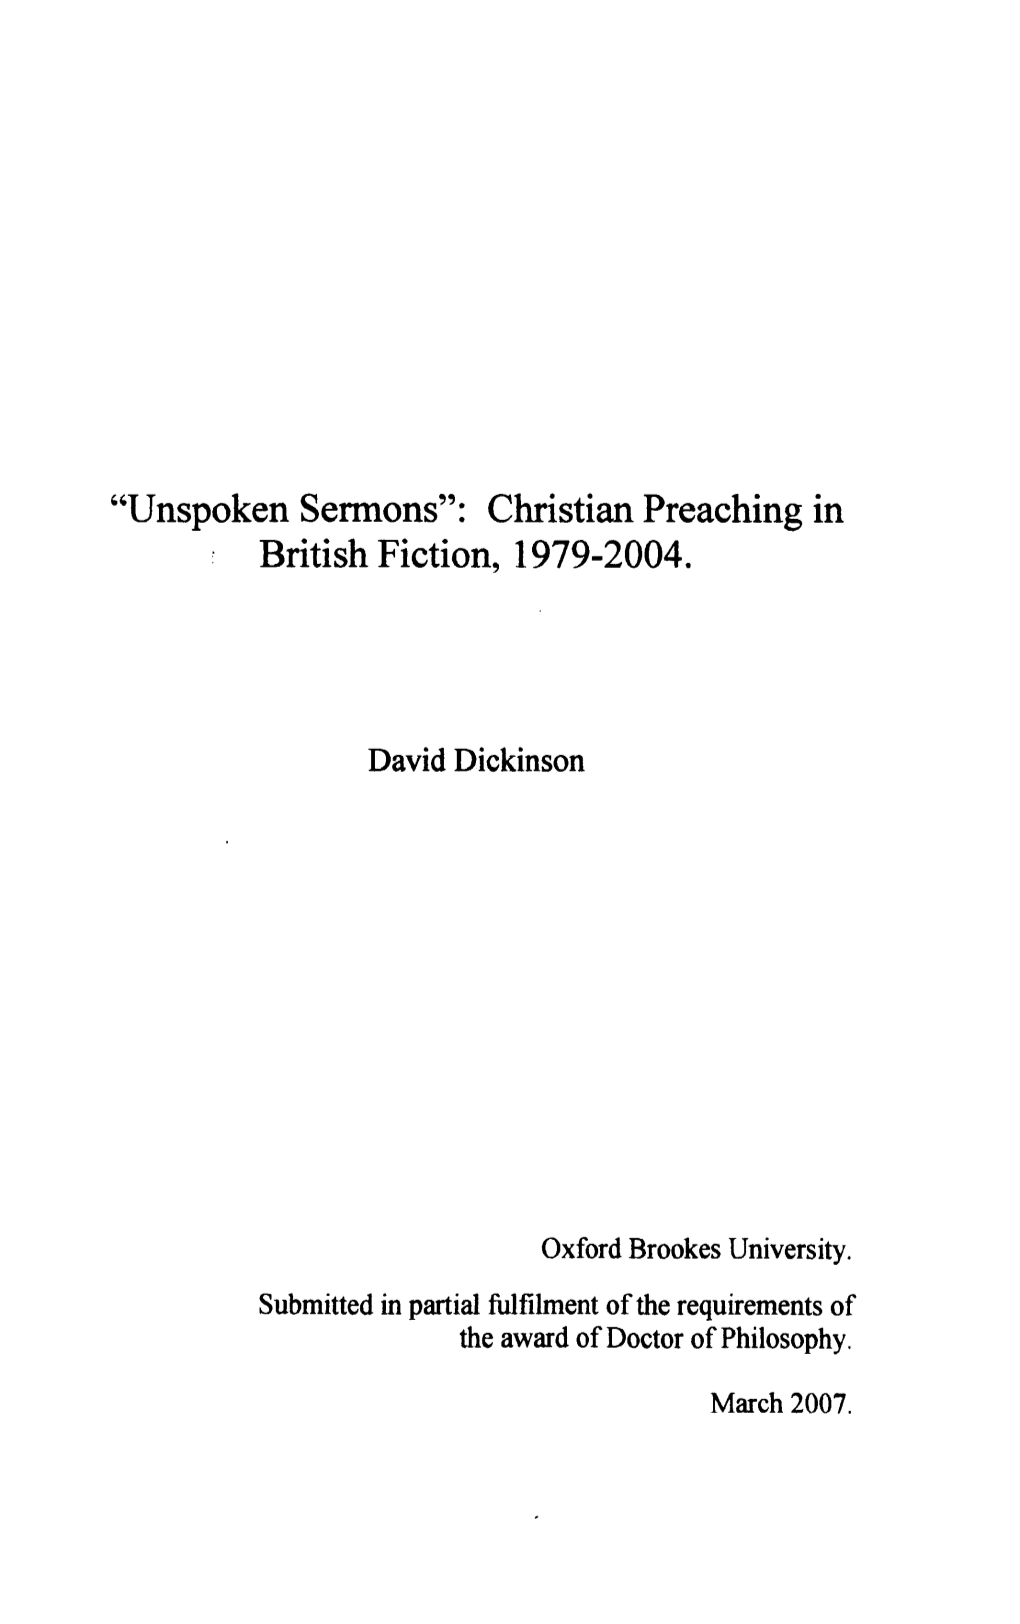 Unspoken Sermons": Christian Preaching in British Fiction, 1979-2004